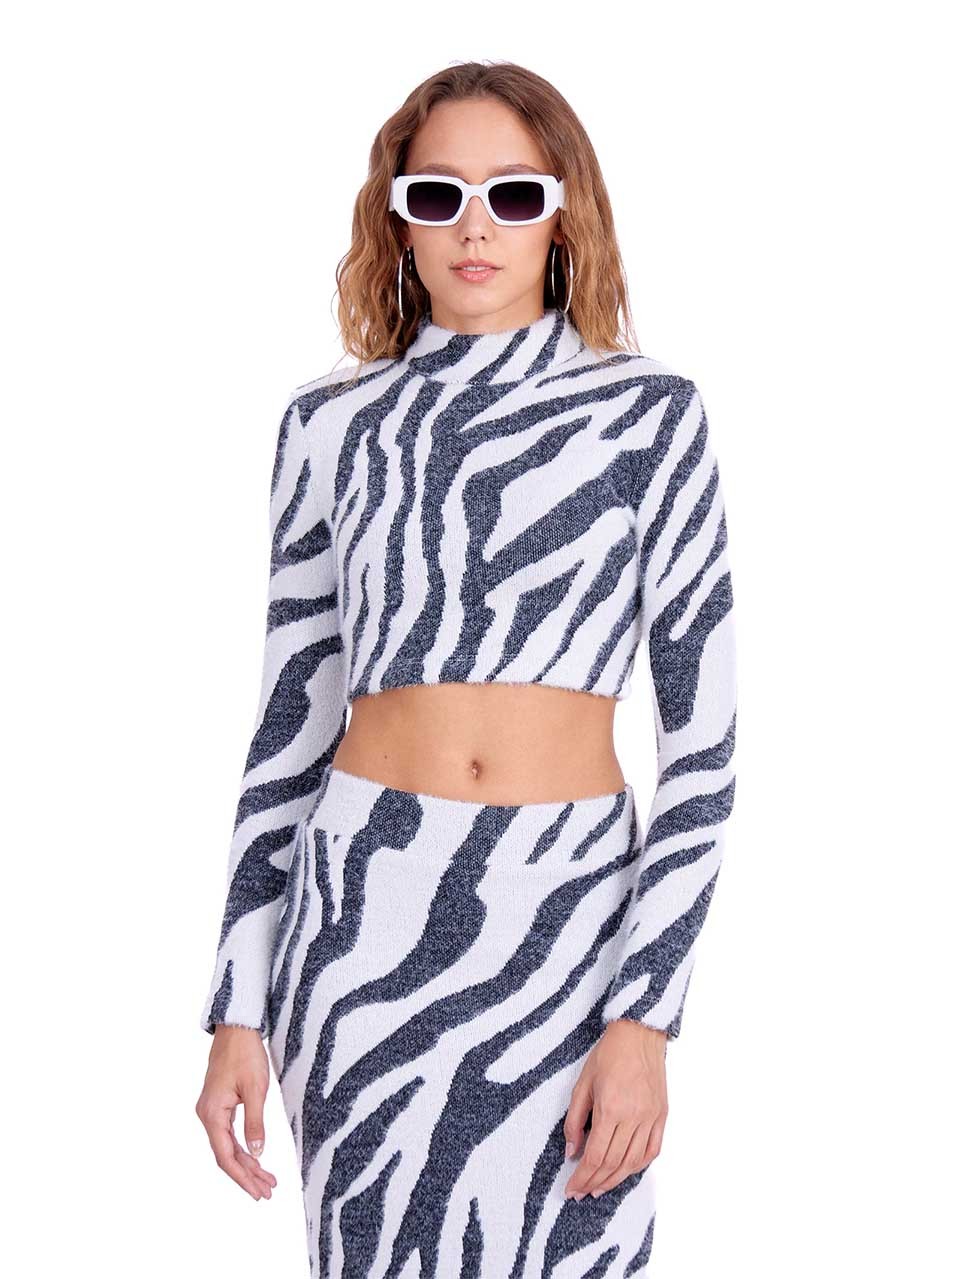 Women's zebra patterned Suit  Black White